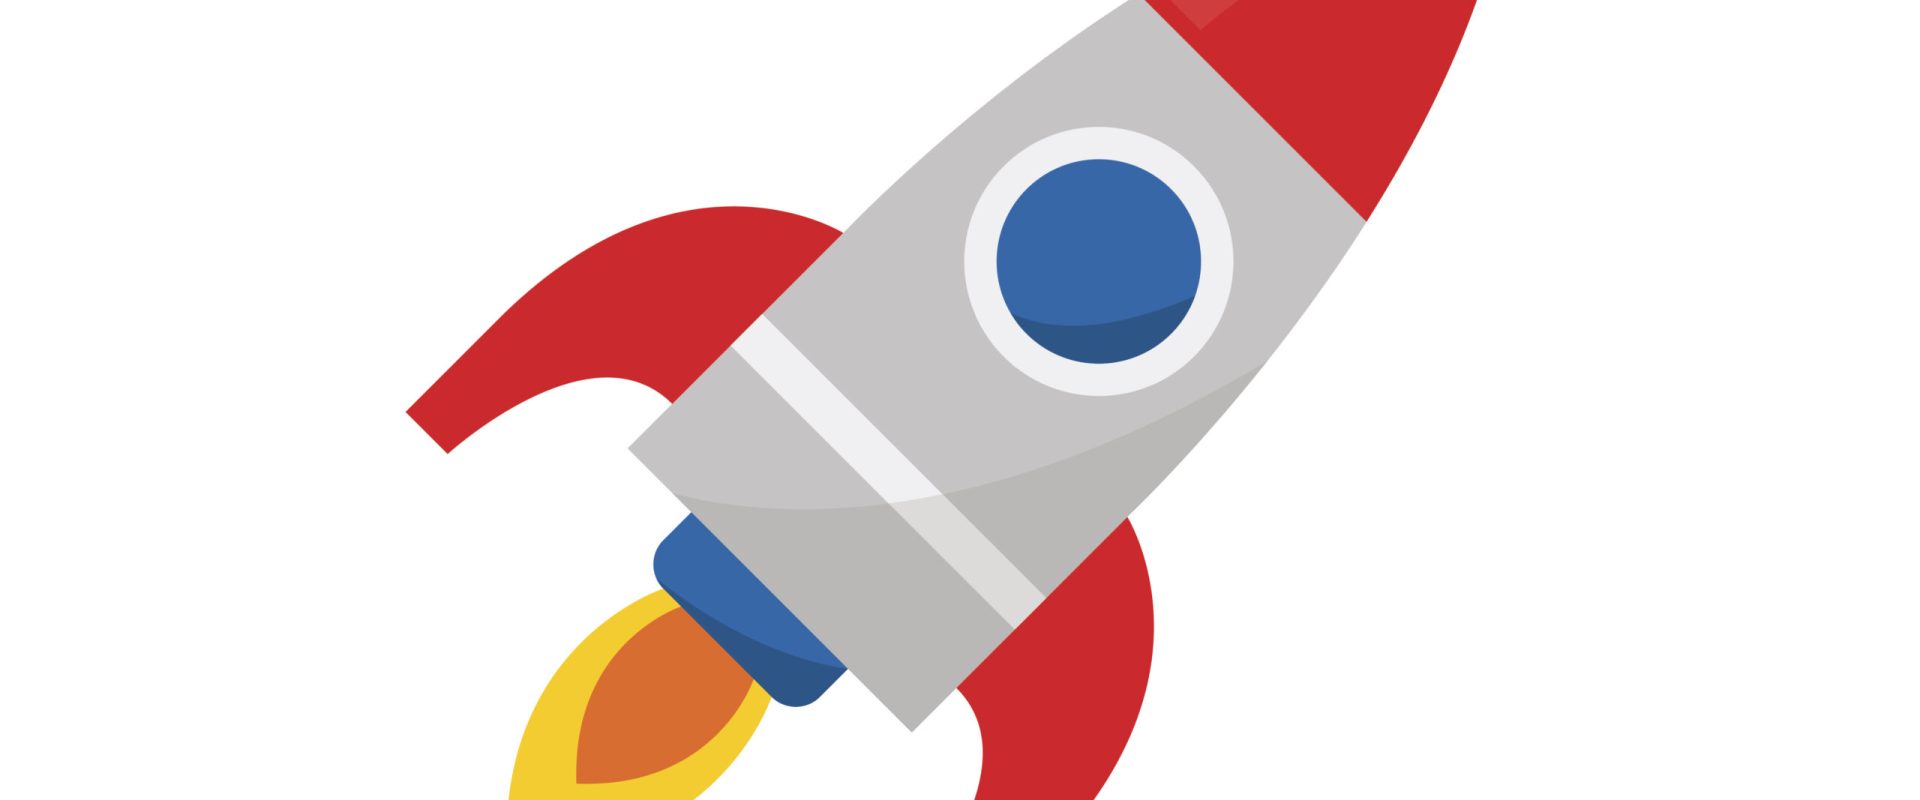 Illustration of a rocket icon